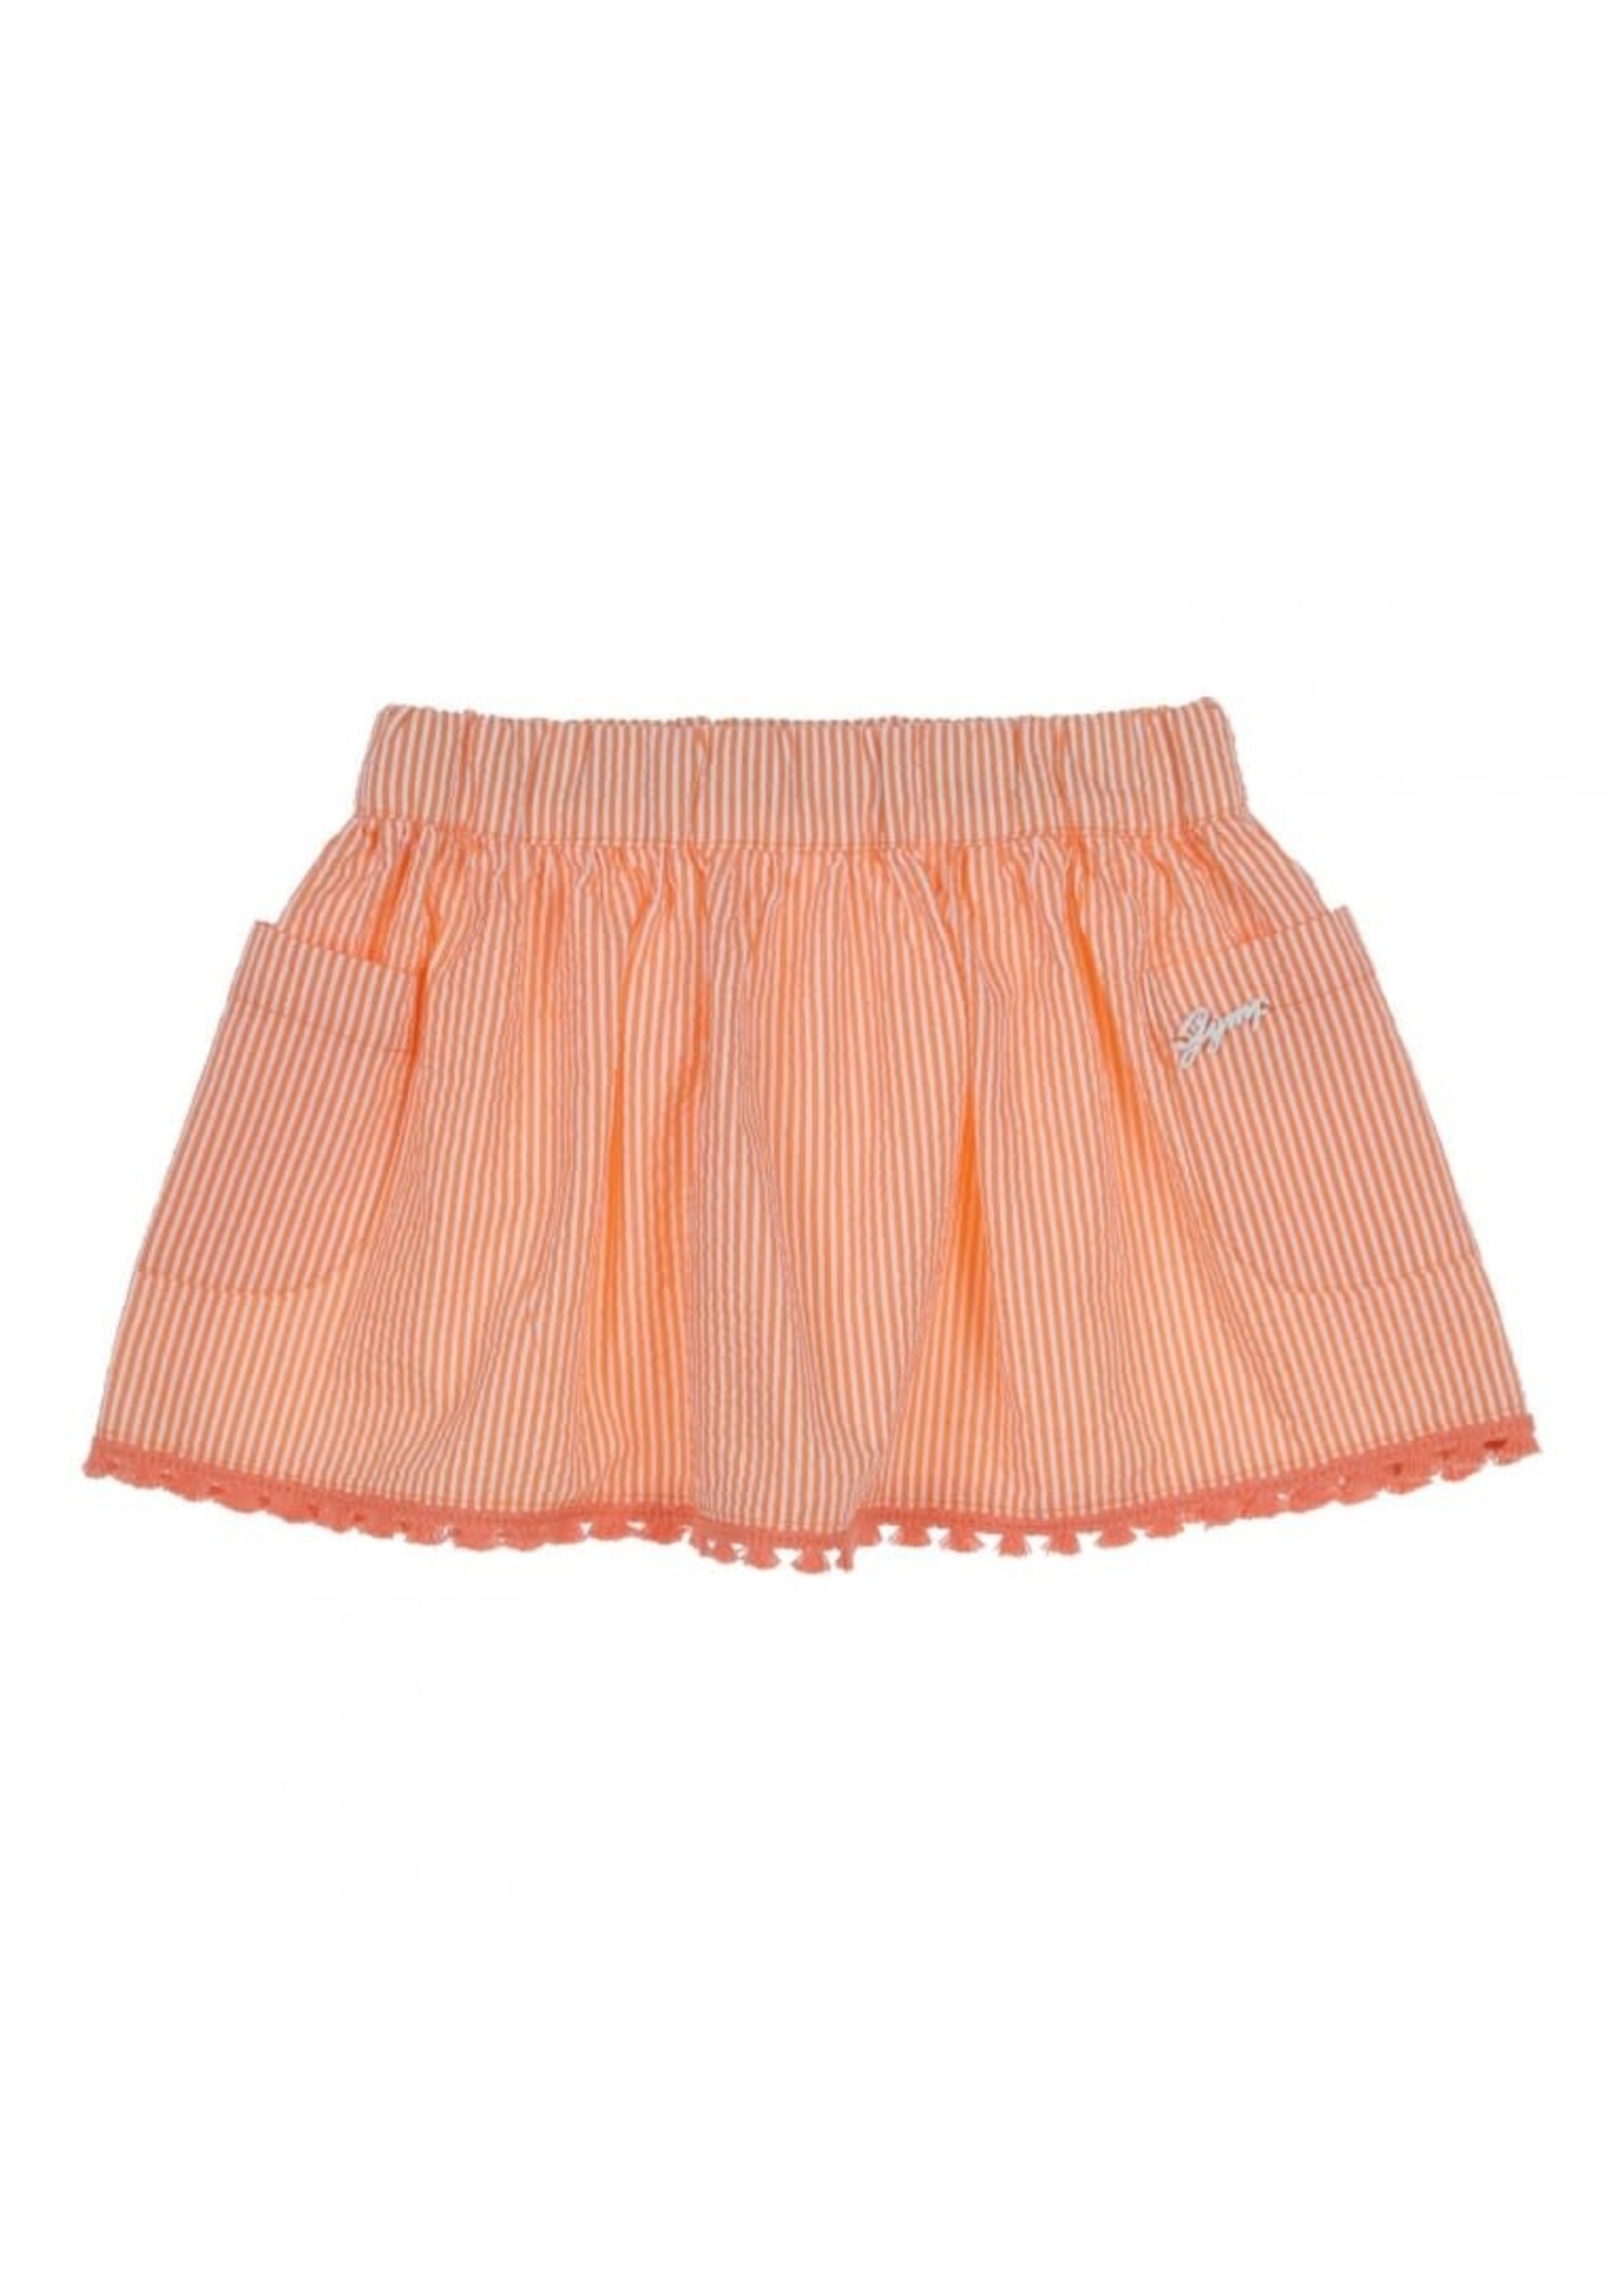 GYMP GYMP Skirt Caprio Orange 430-4188-10